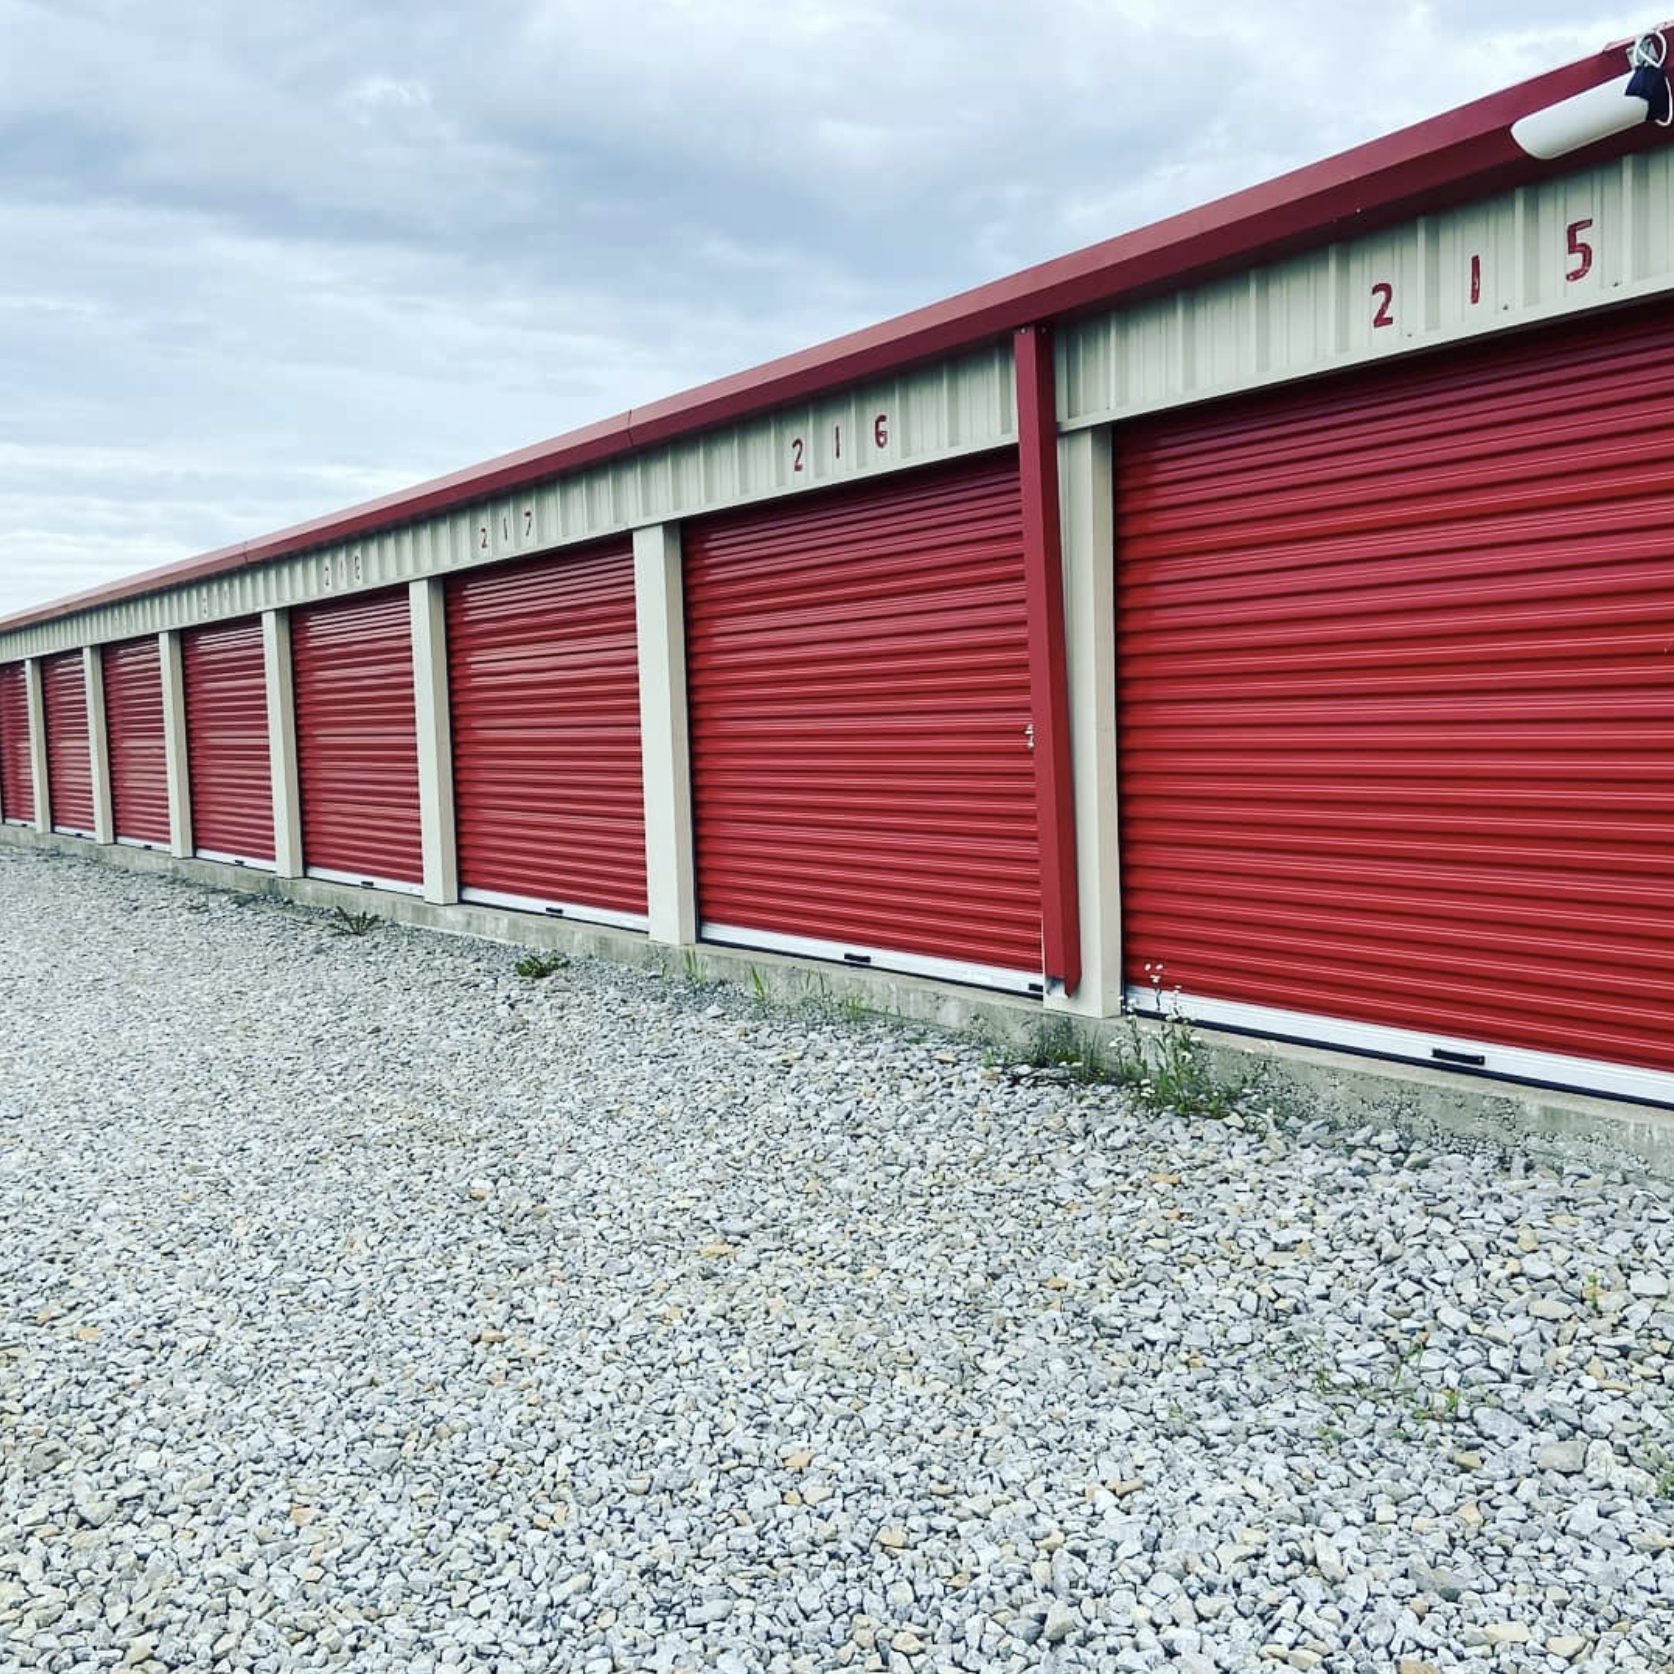 Self storage facility harrisburg illinois